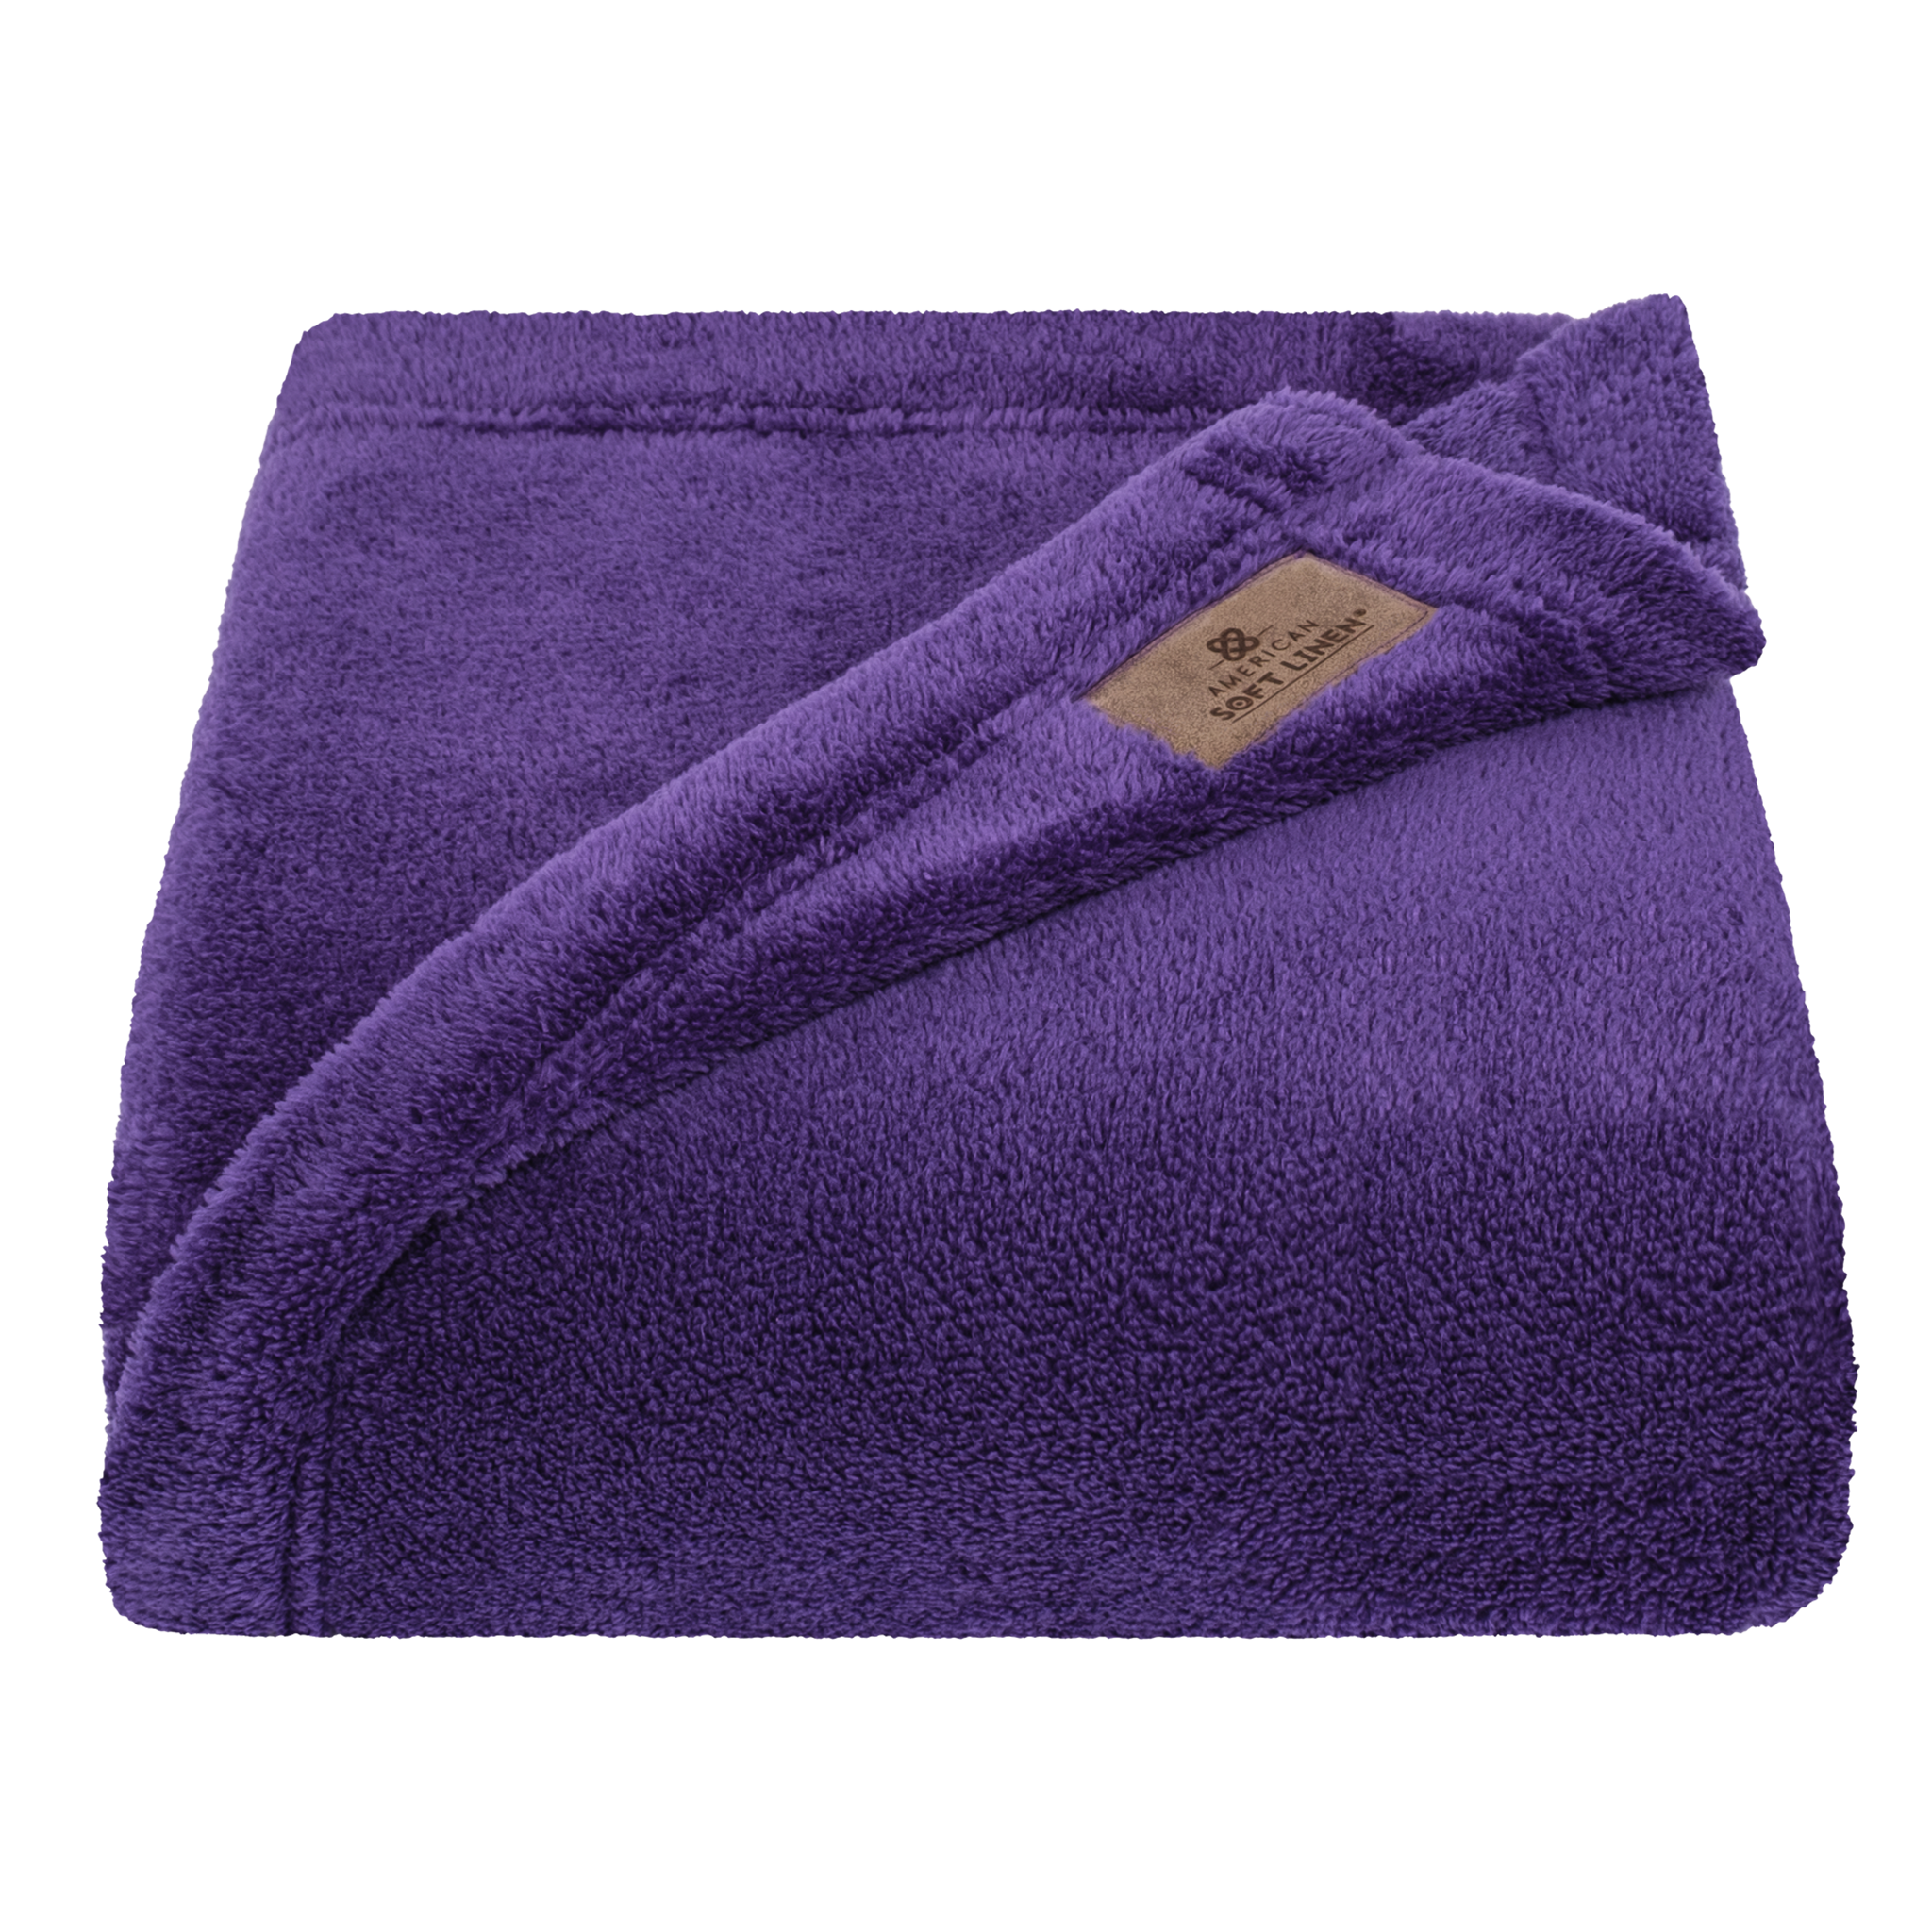 American Soft Linen - Bedding Fleece Blanket - Throw Size 50x60 inches - Purple - 3